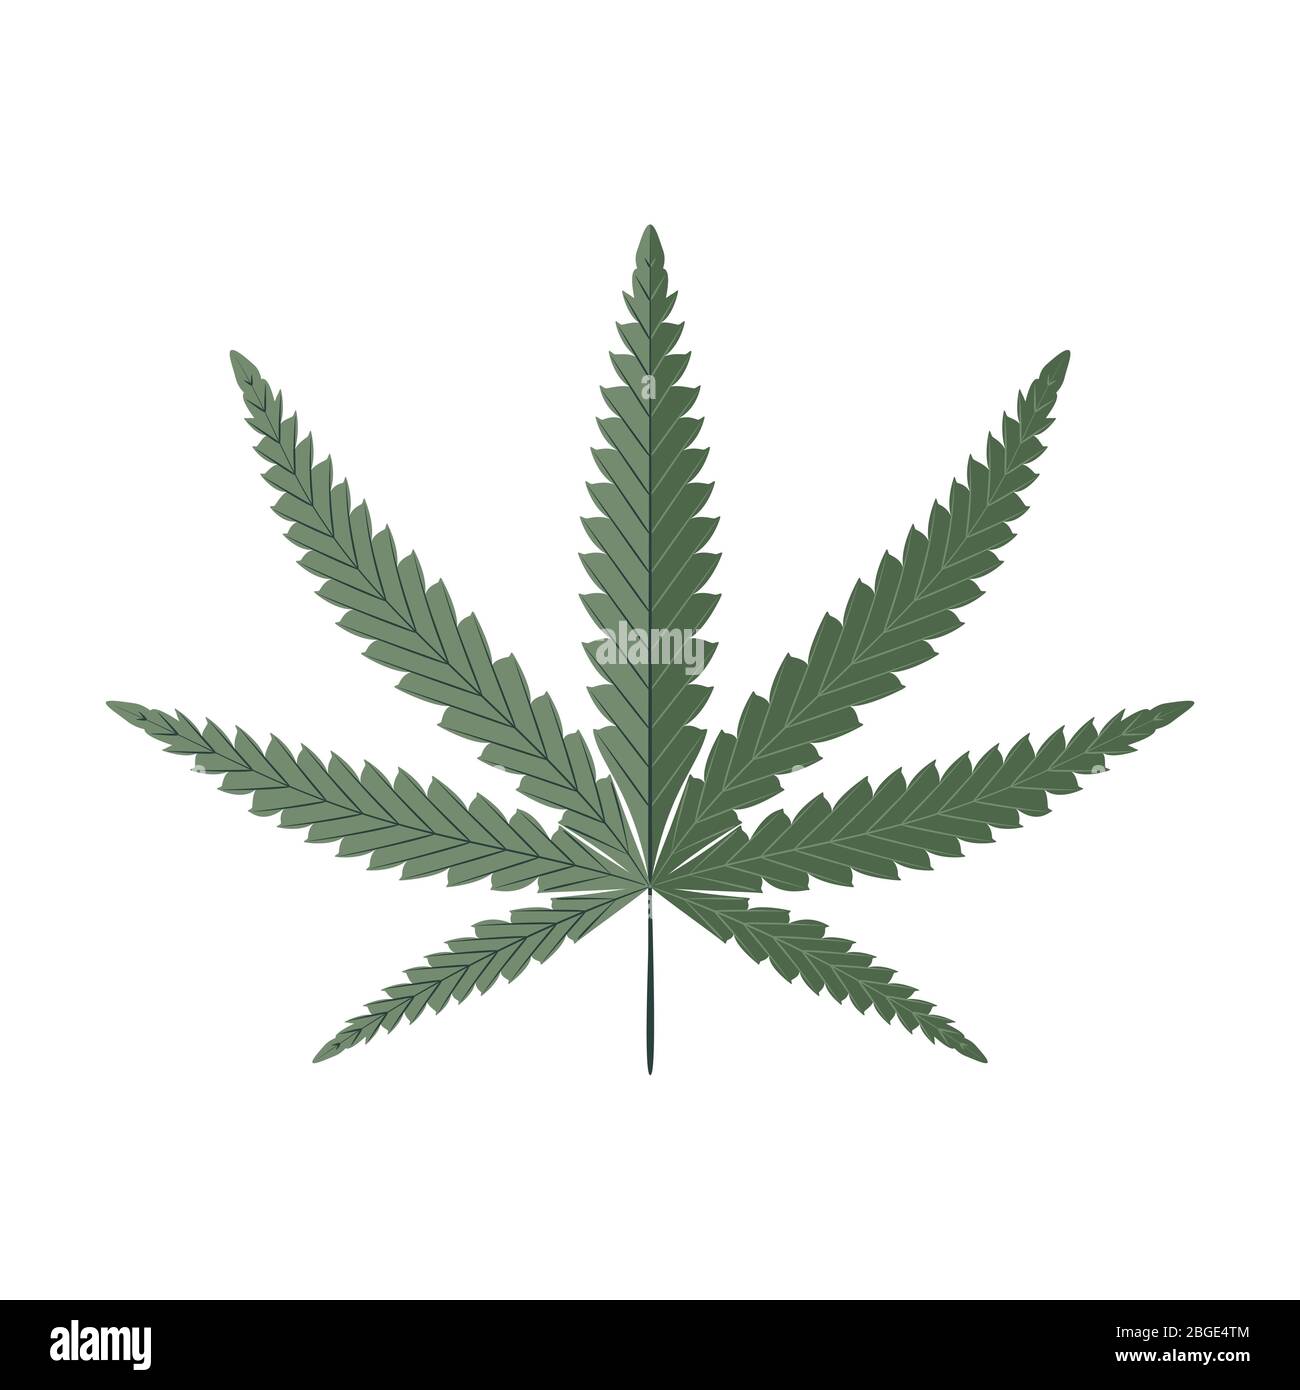 Cannabisblatt auf weiß isoliert. Hanf Vektor Illustration. Stock Vektor